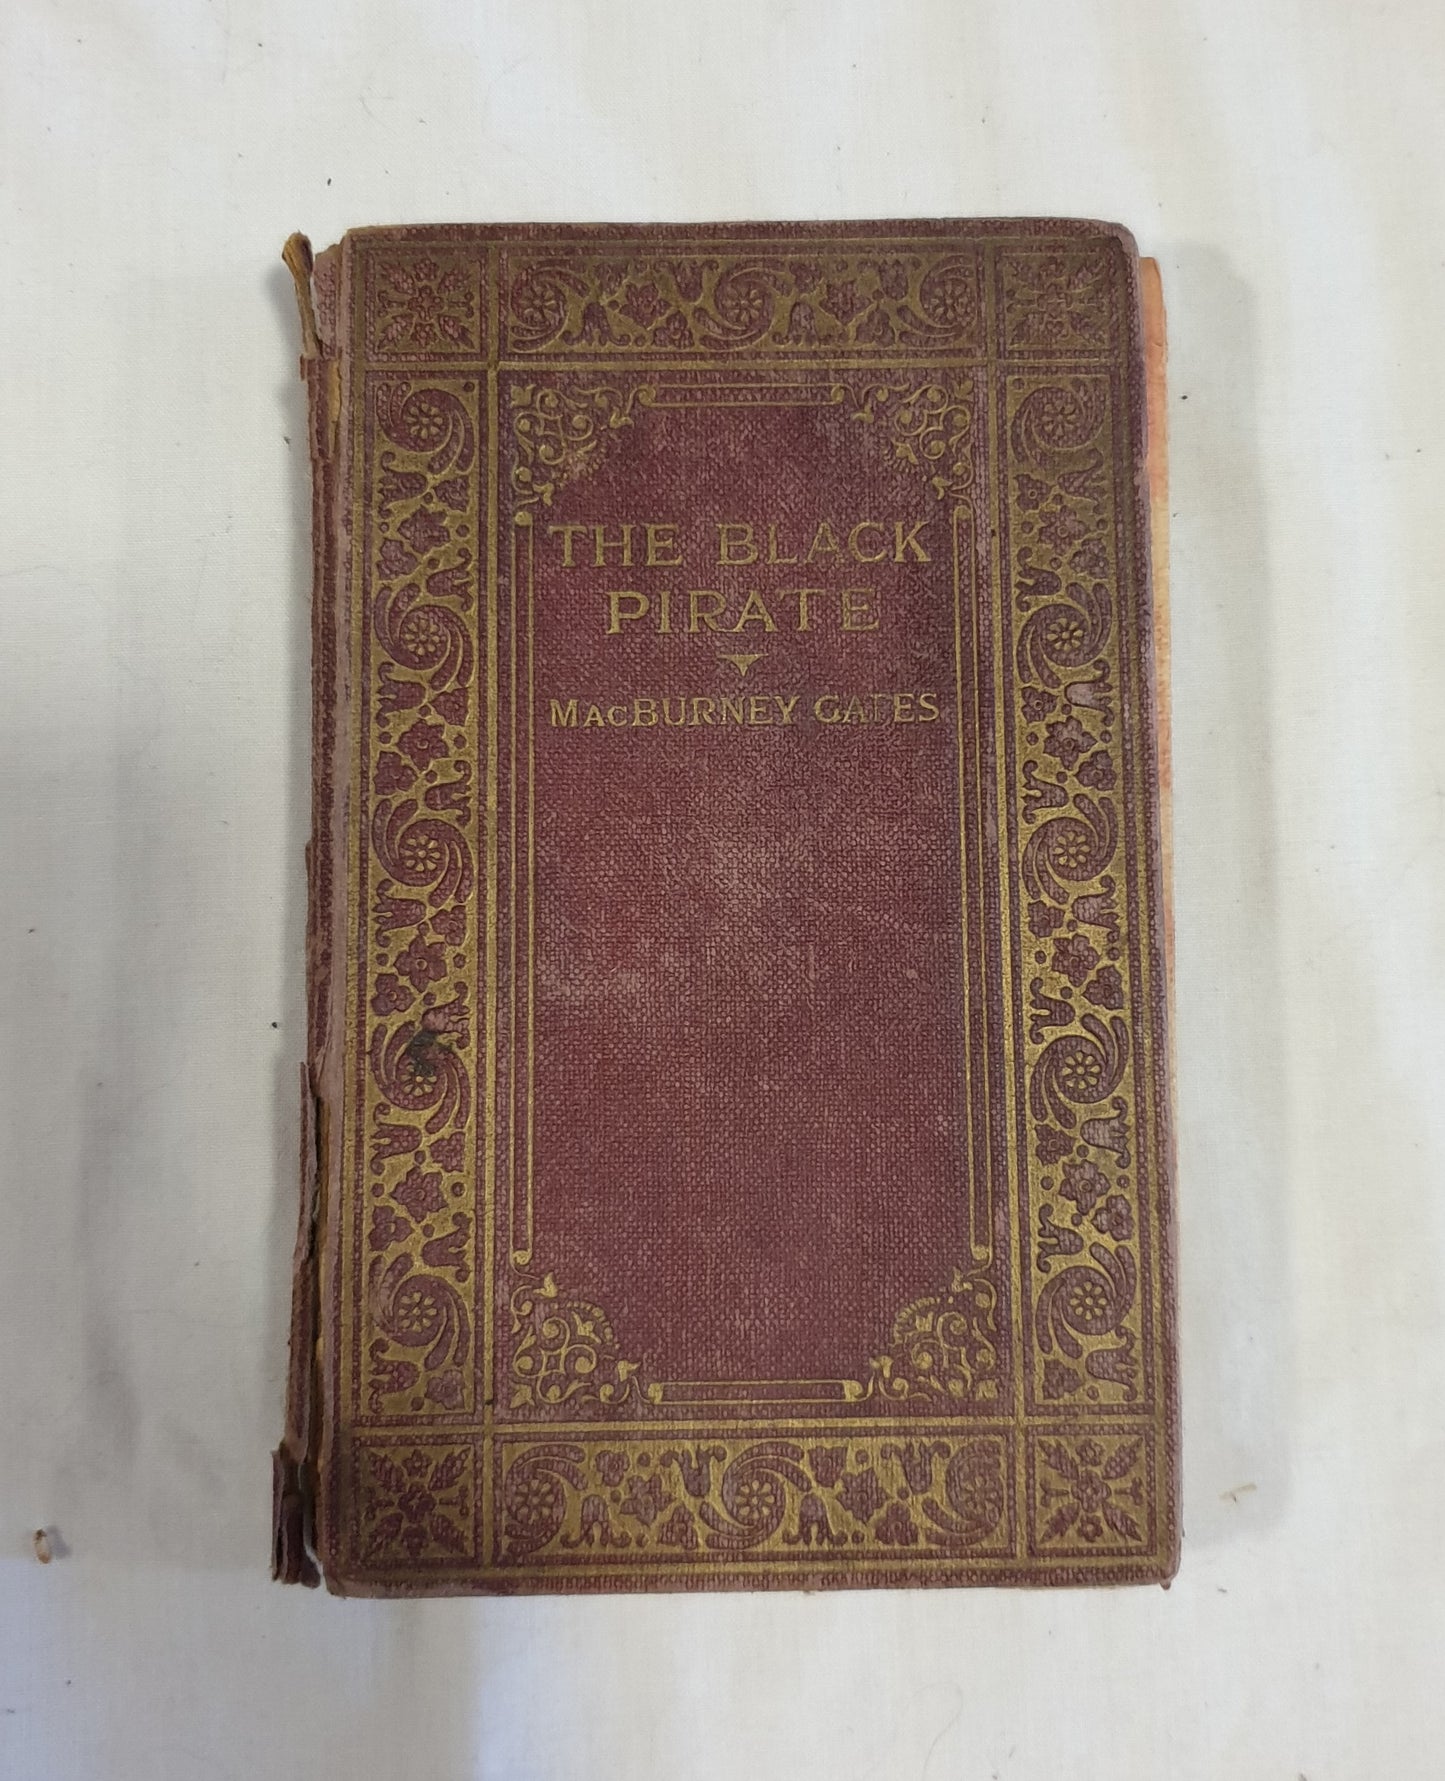 The Black Pirate by MacBurney Gates